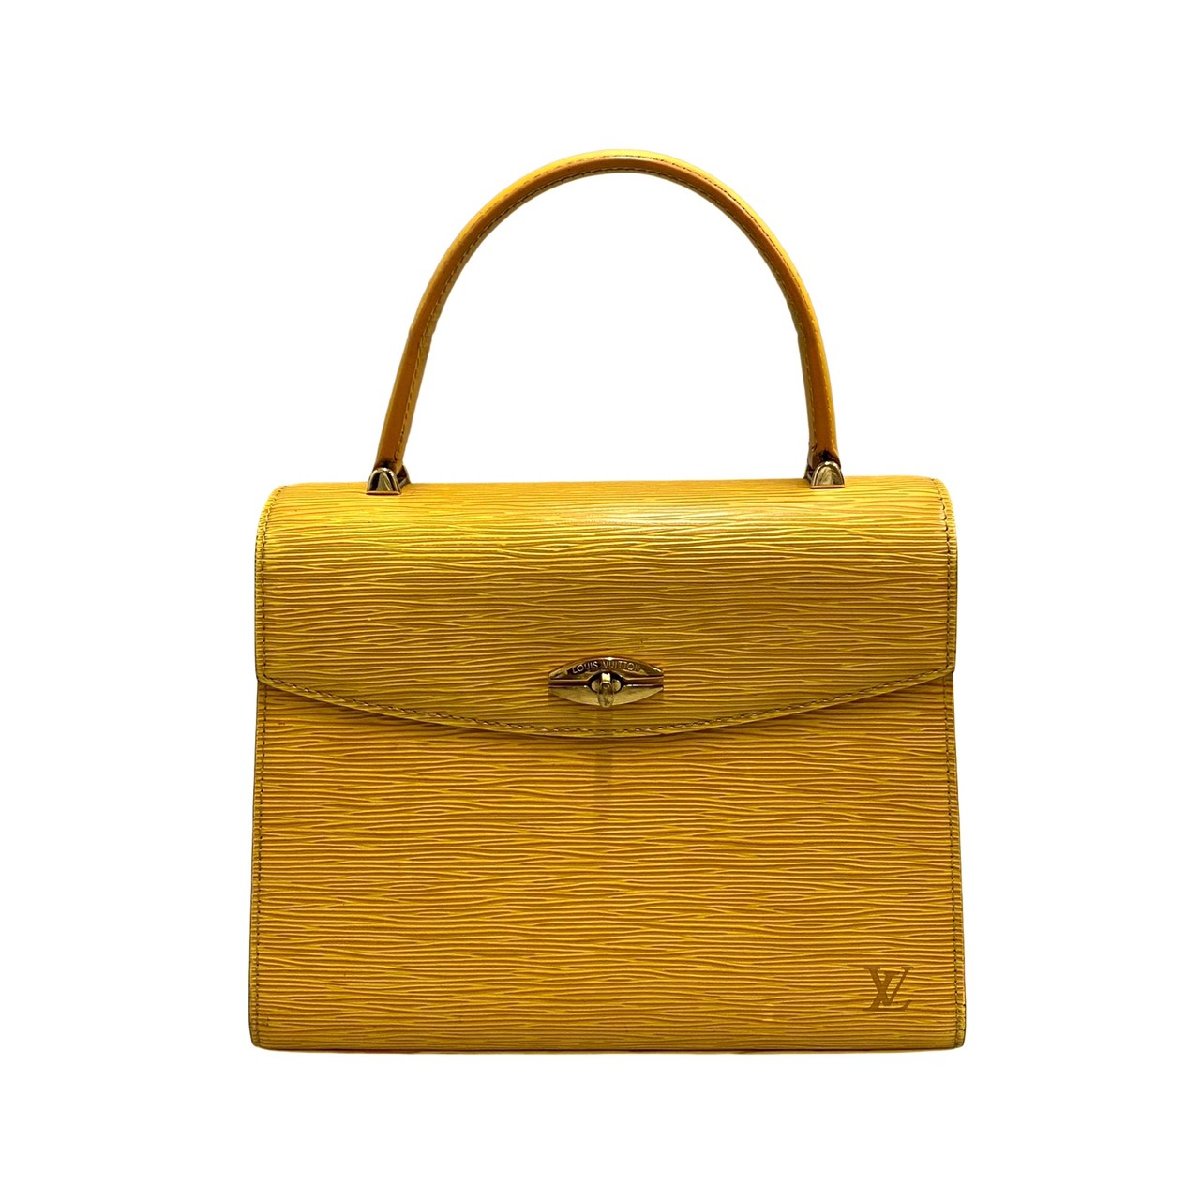 Louis Vuitton Malesherbes Handbag Leather Handbag M52379 in Good condition